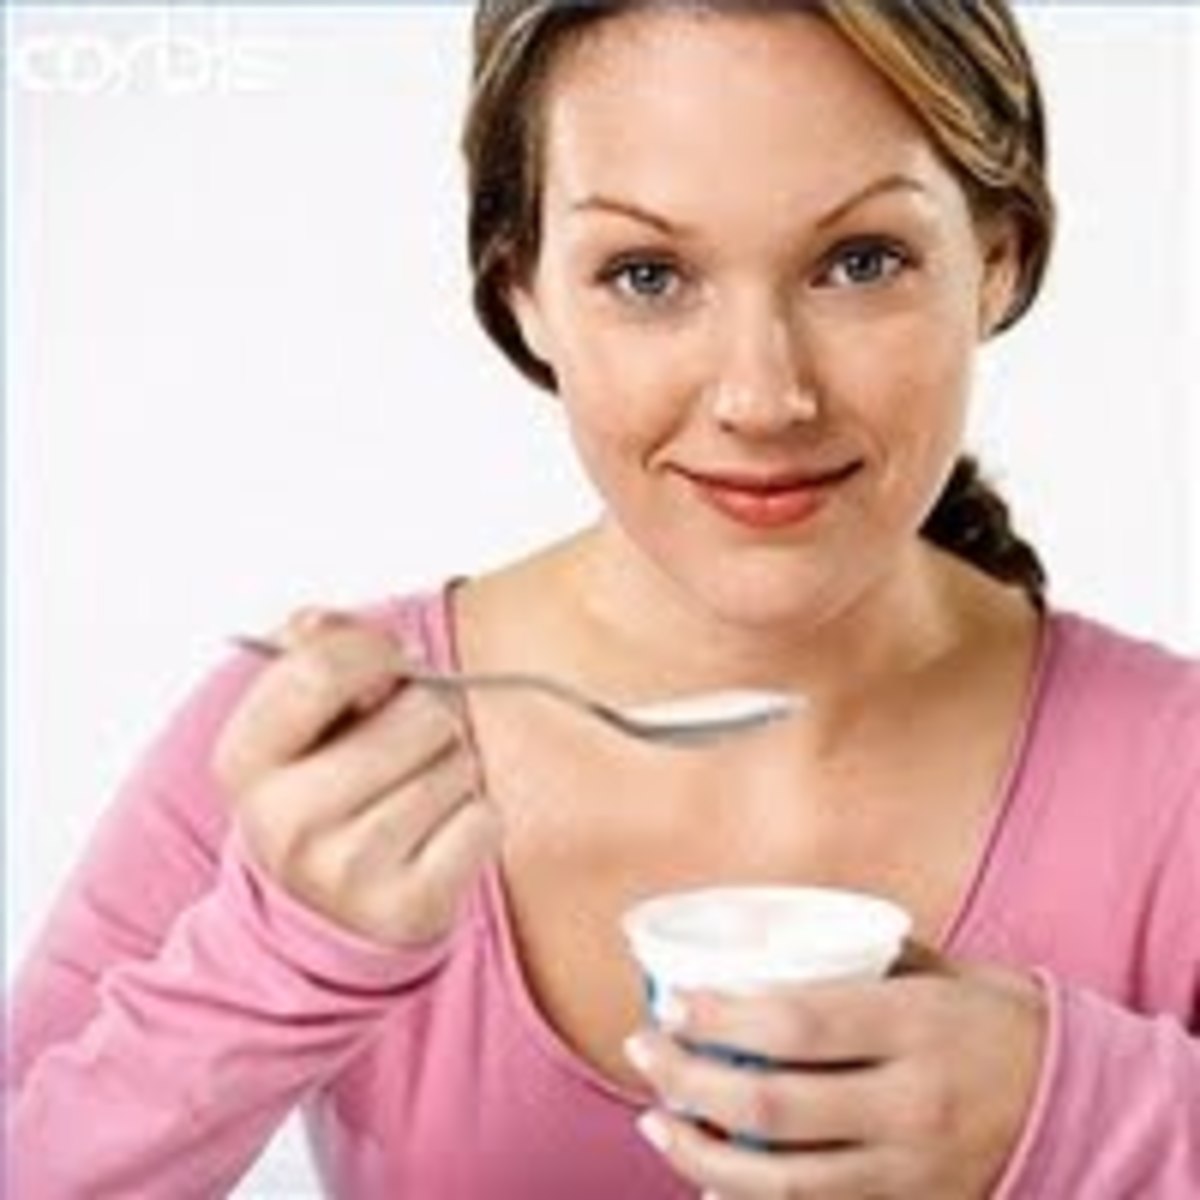 Make sure the yogurt has no added flavors or sugar.